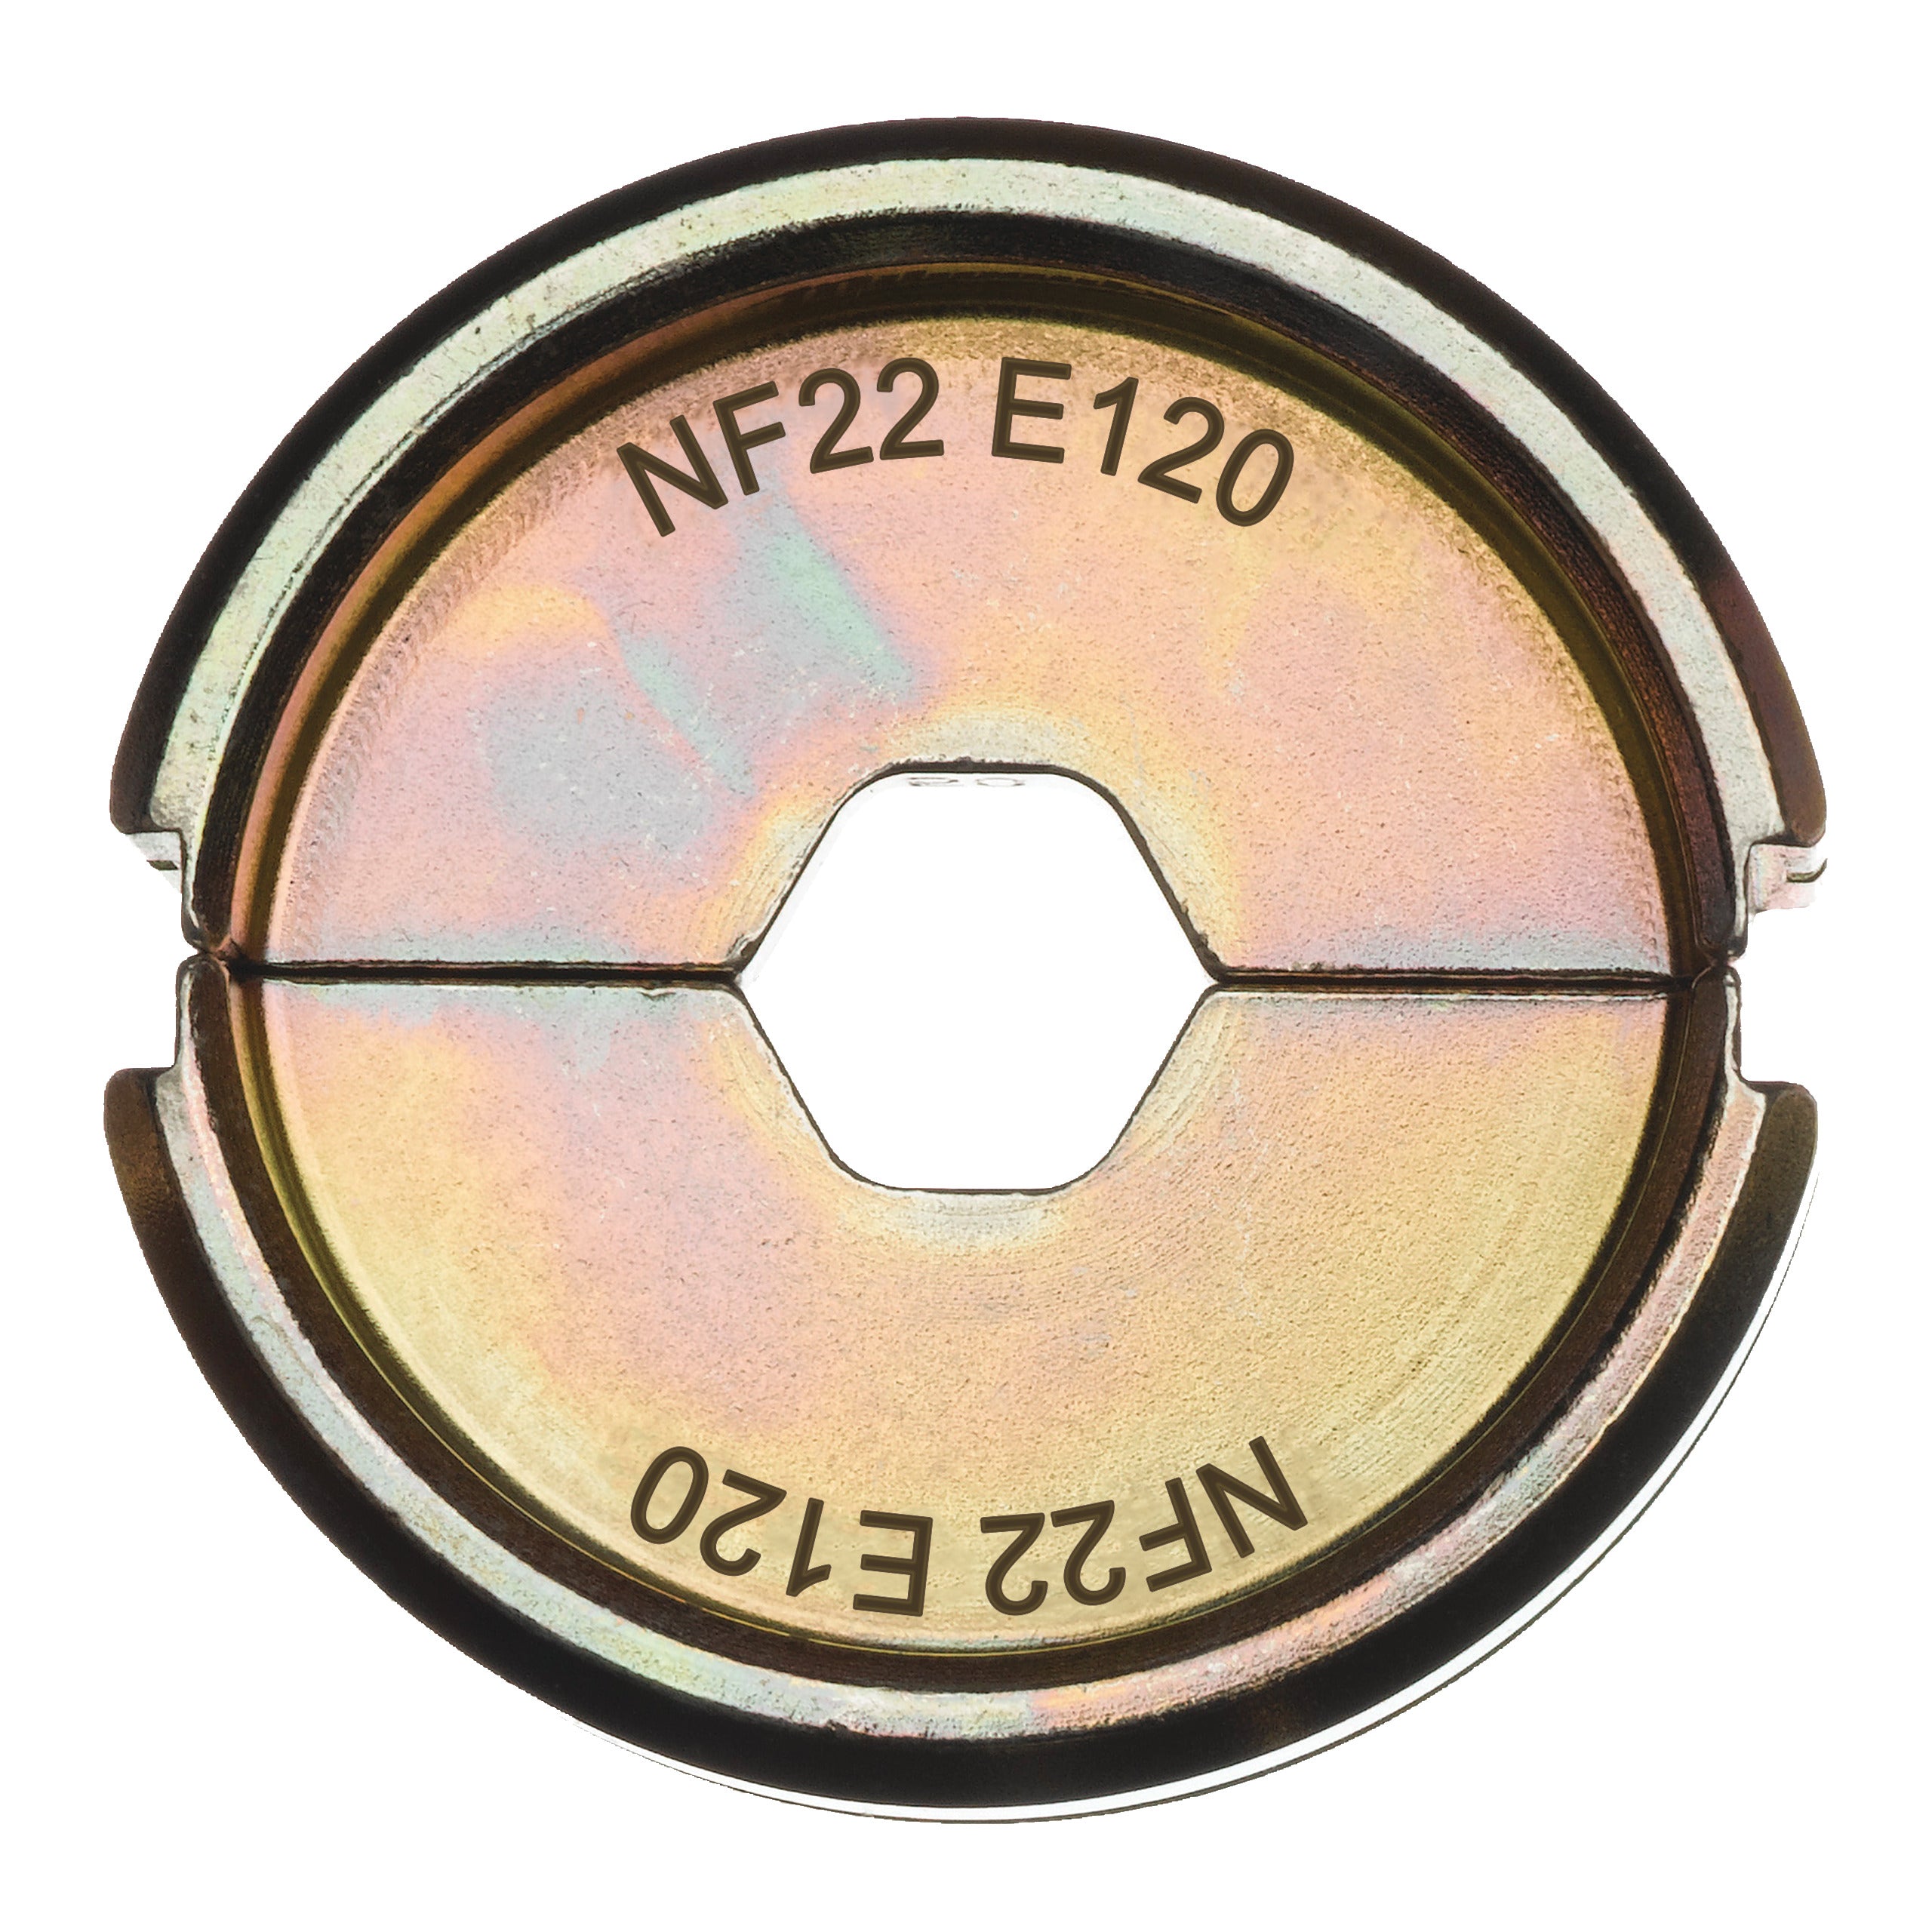 MATRICE POUR SERTISSEUSE FORCE LOGIC (ELECTRICITE) NF22 E120